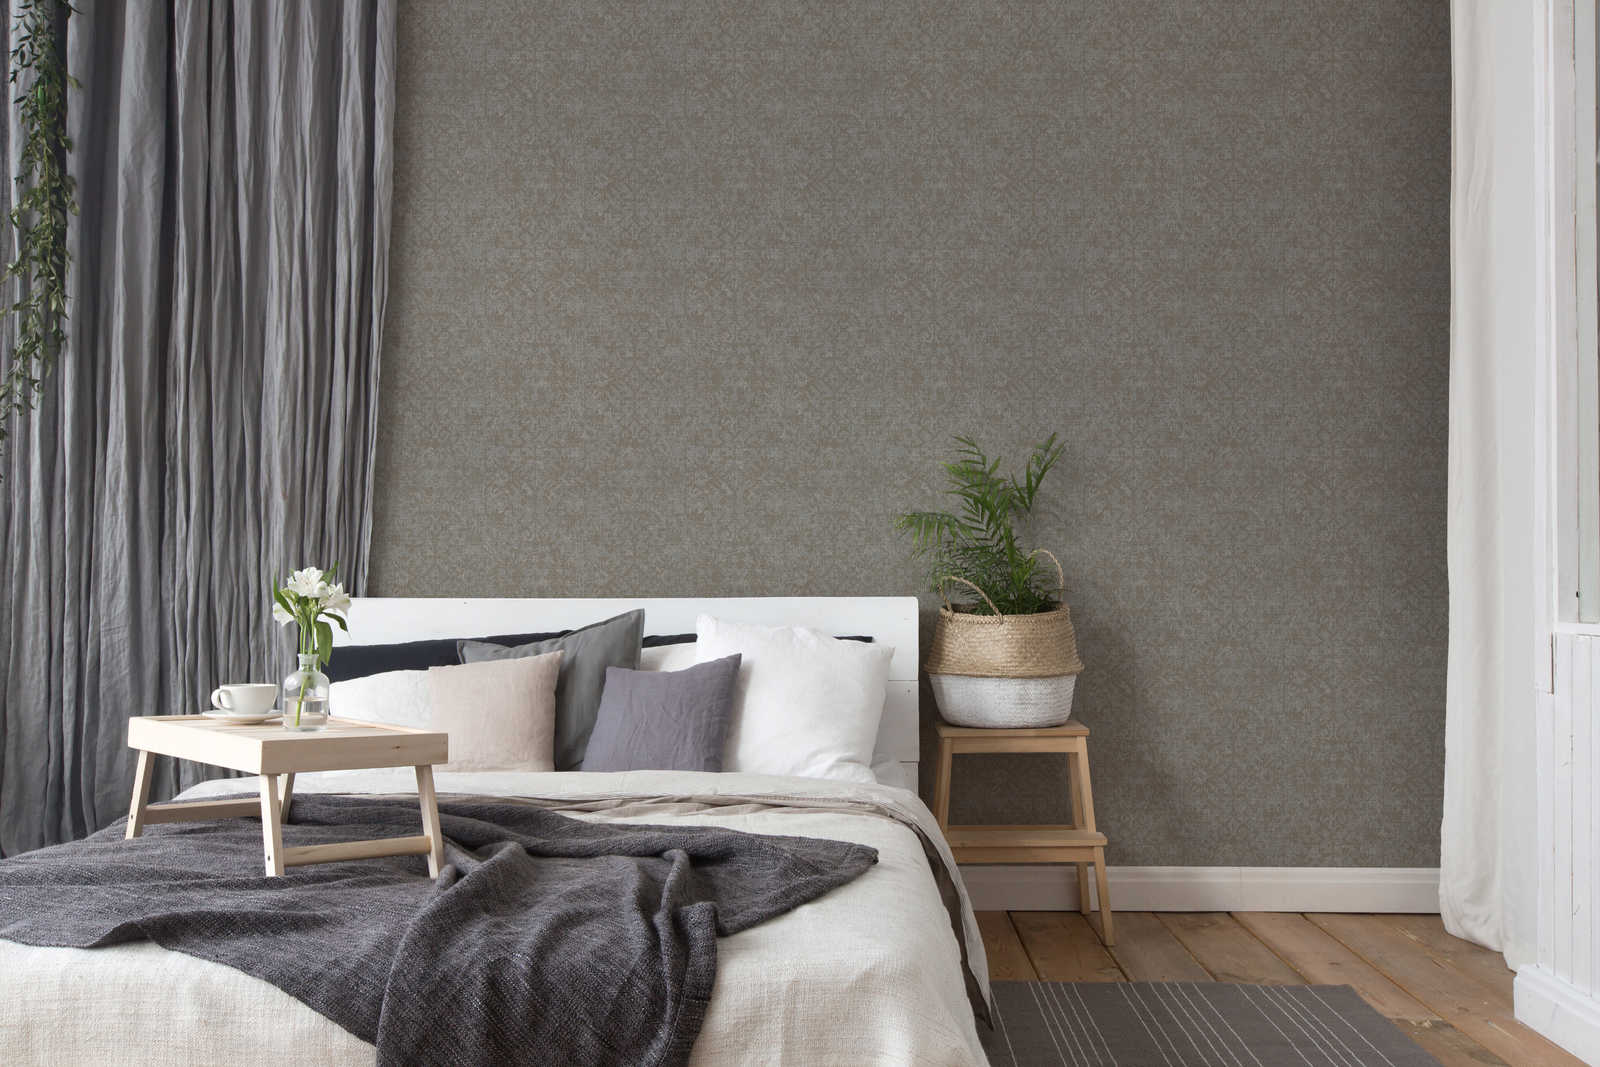             Ethno wallpaper grey-brown with brocade textile look
        